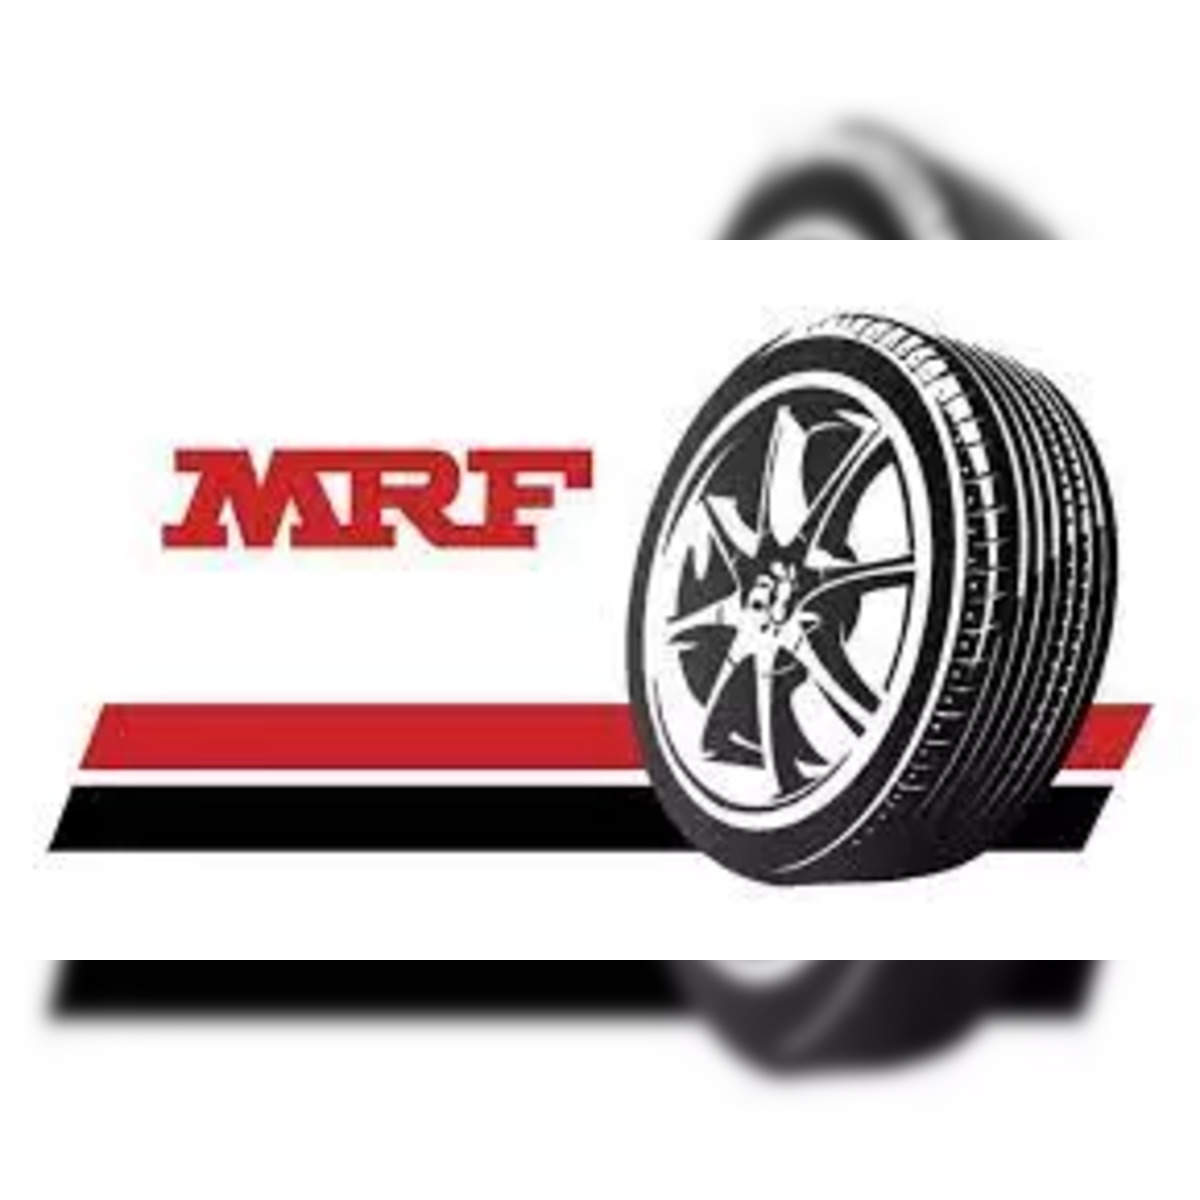 MRF Tyre Success Story: कभी गुब्बारे बनाती थी टायर बेचने वाली MRF, जिसके  शेयर्स ने रिकॉर्ड बनाया | MRF tyre Success Story From selling Balloons on  the streets to becoming a Tyre